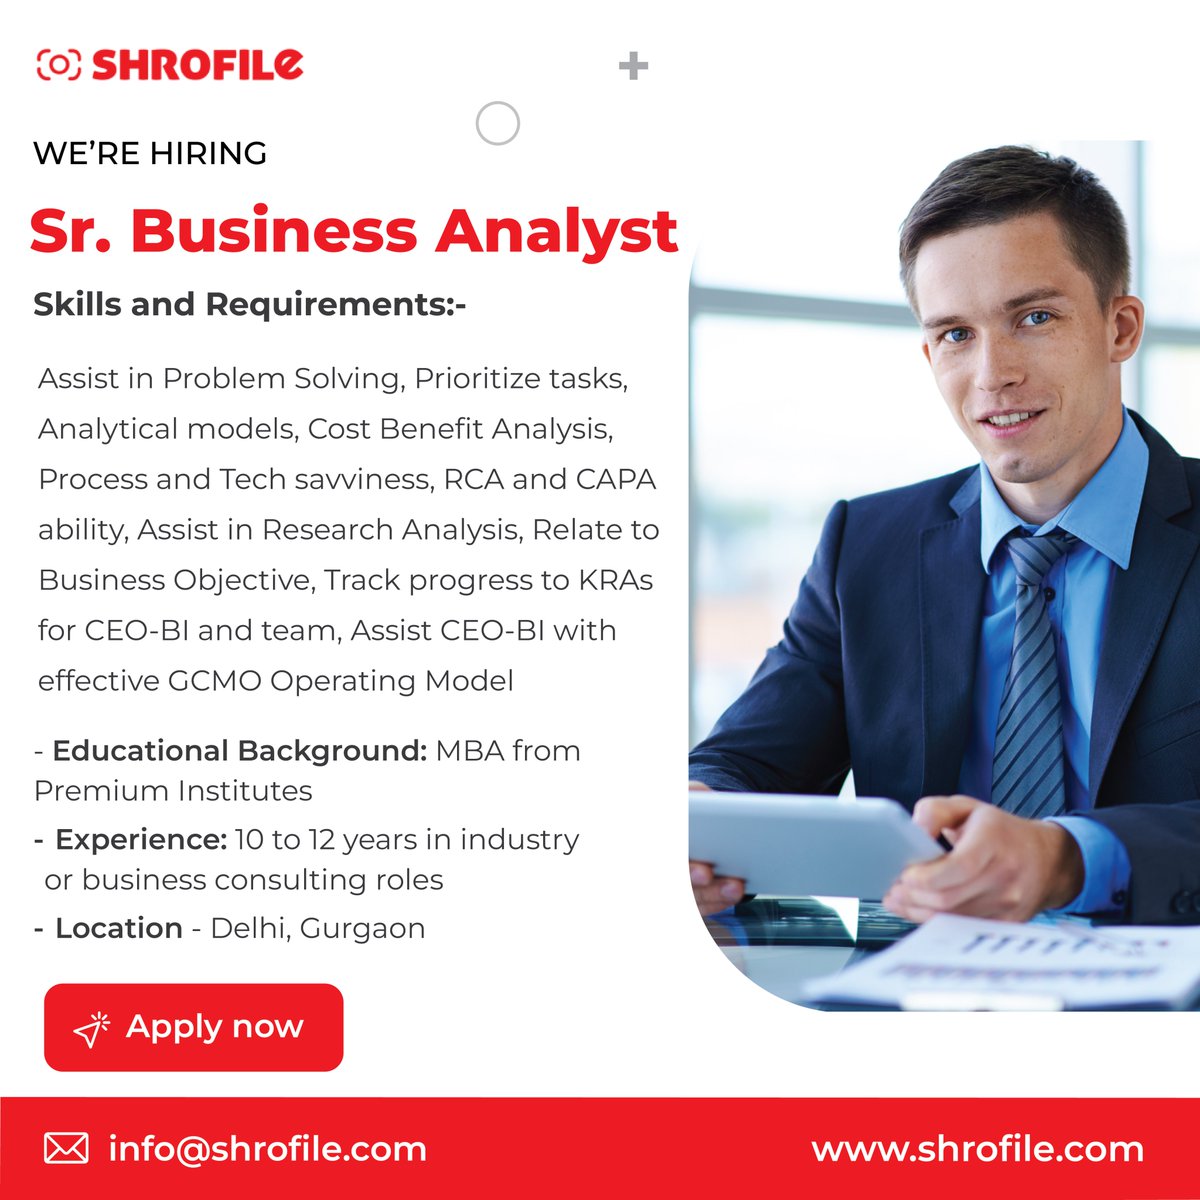 📢 We're Hiring! 🌟 Senior Business Analyst - IIM/FMS/XLRI/MDI

🚀 Apply now - shrofile.com/Submit-Your-Re…

✉️ info@shrofile.com

- Location - Delhi, Gurgaon

#Analytics #Statistics #DataVisualization #Tableau #BusinessIntelligence #DataManagement #BusinessAnalysis #DataAnalytic